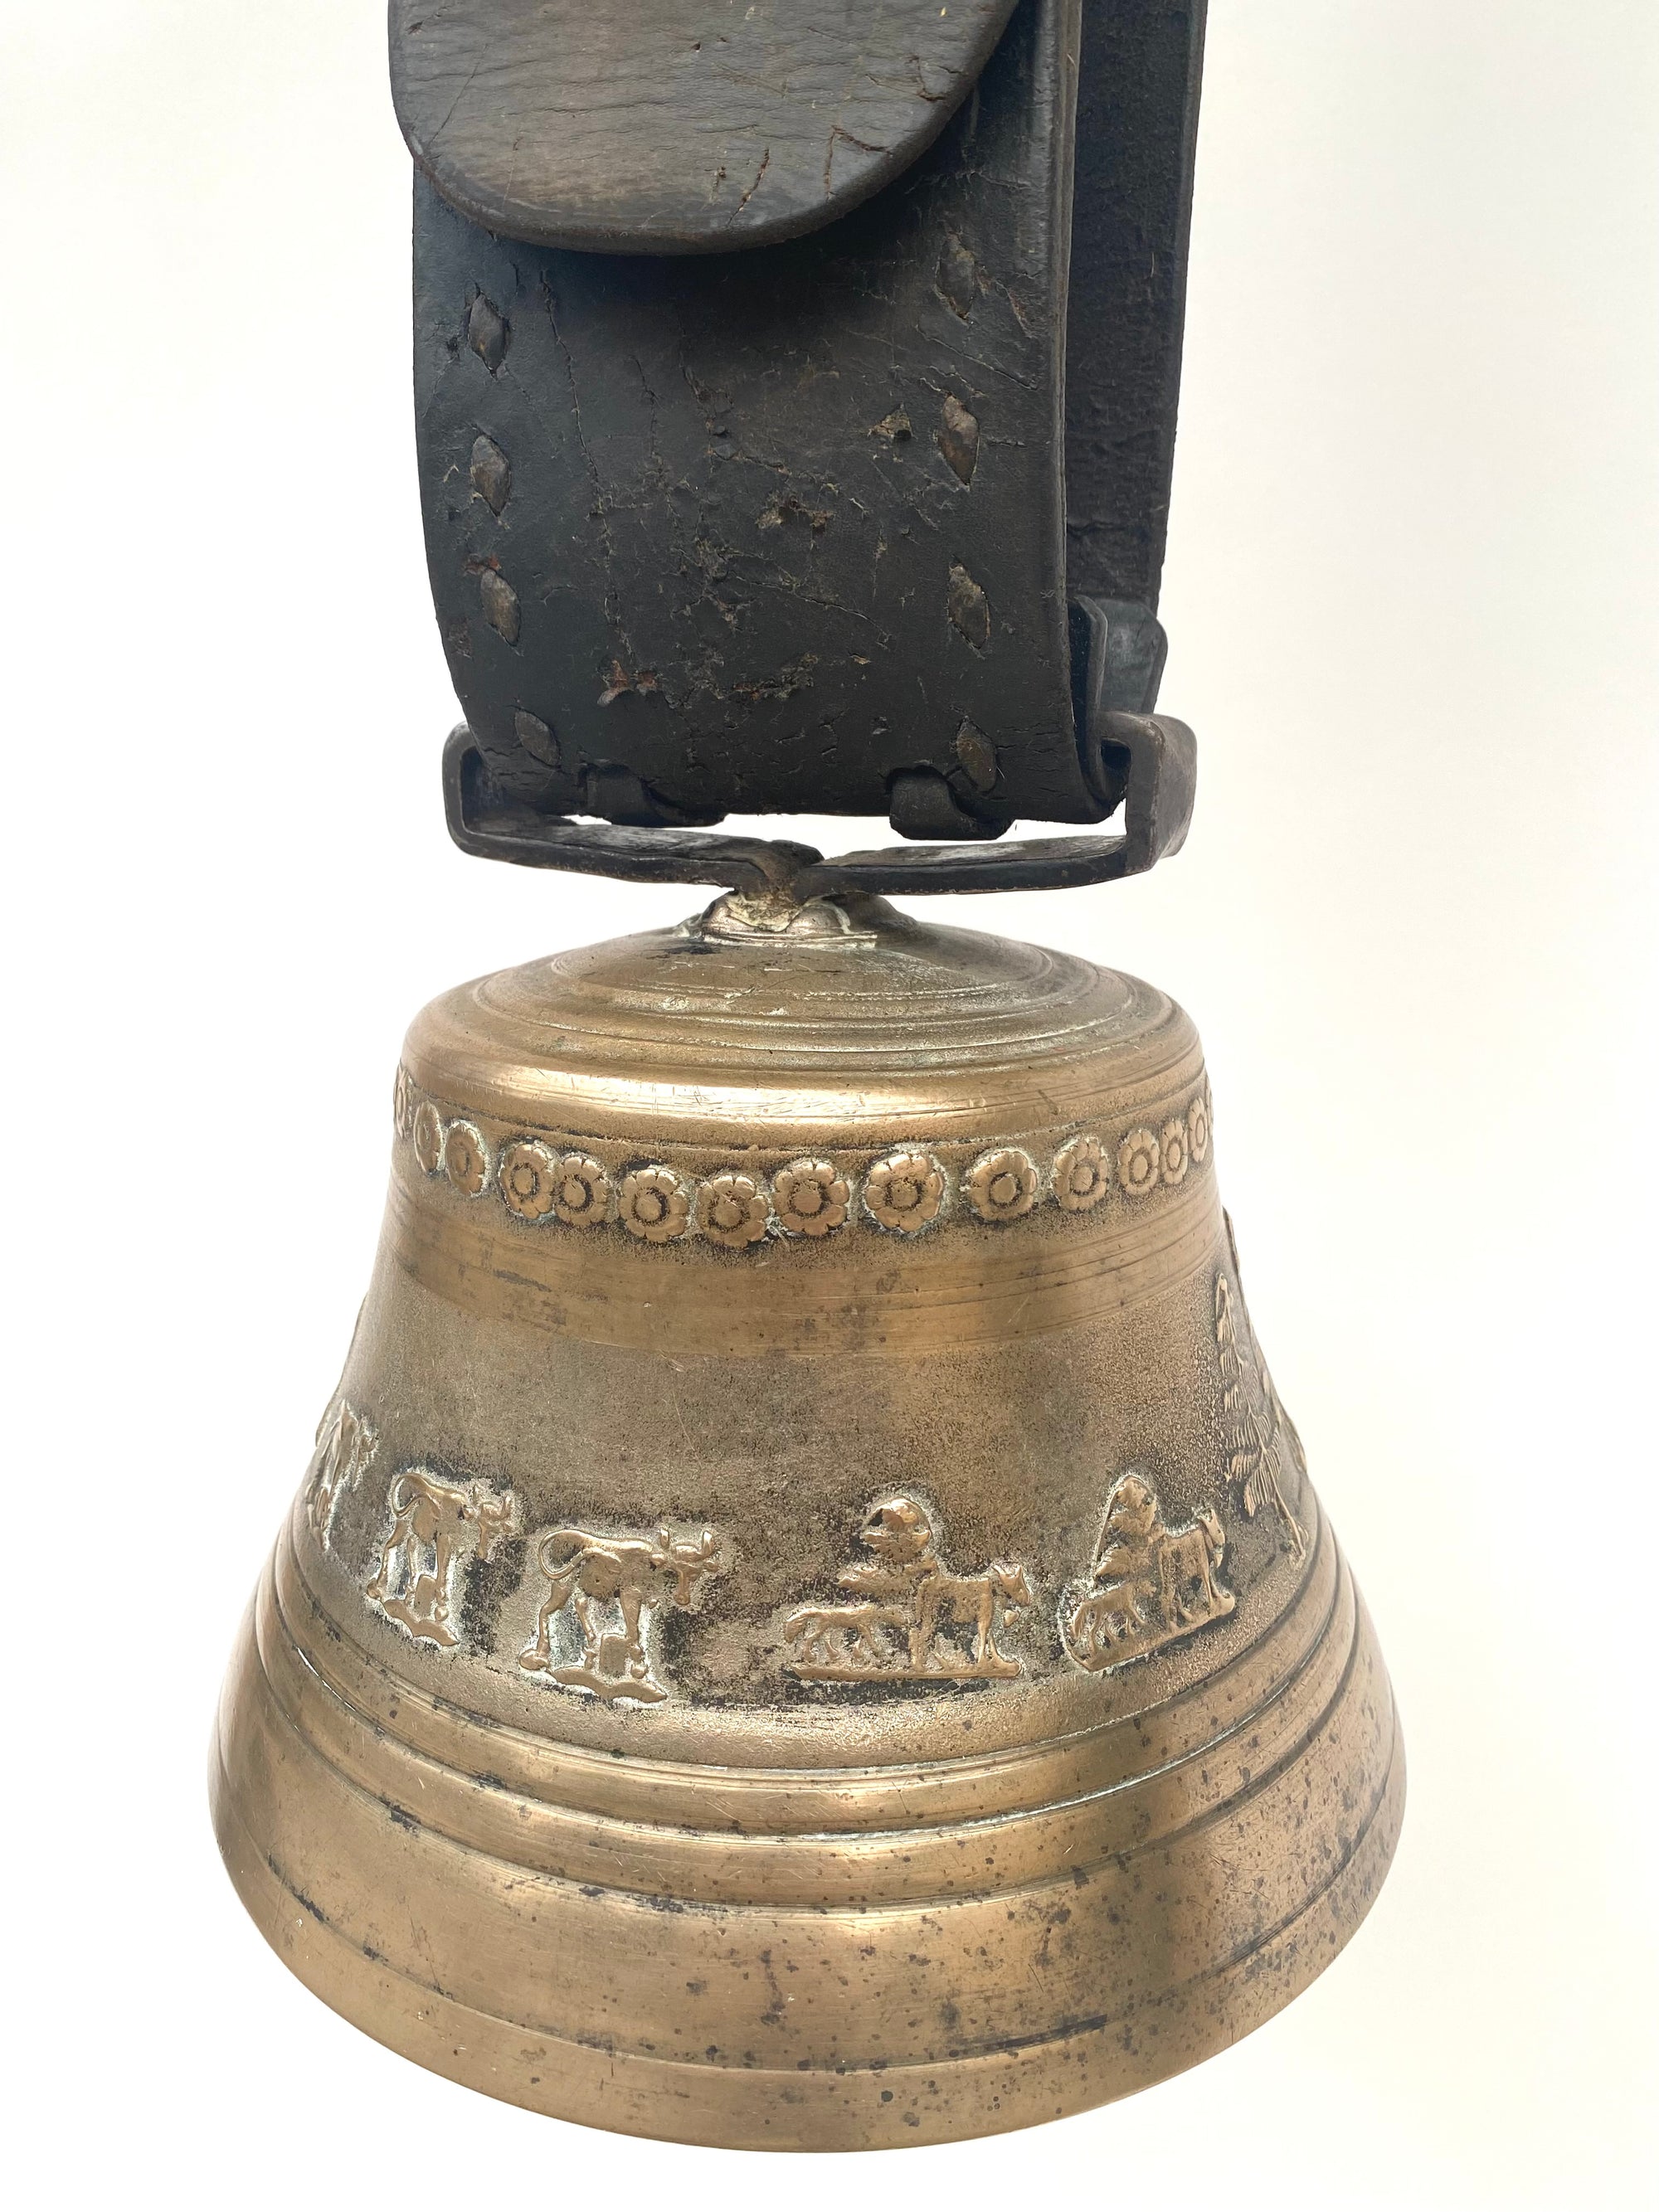 Antique Swiss Glocken Cowbell - VintageWinter